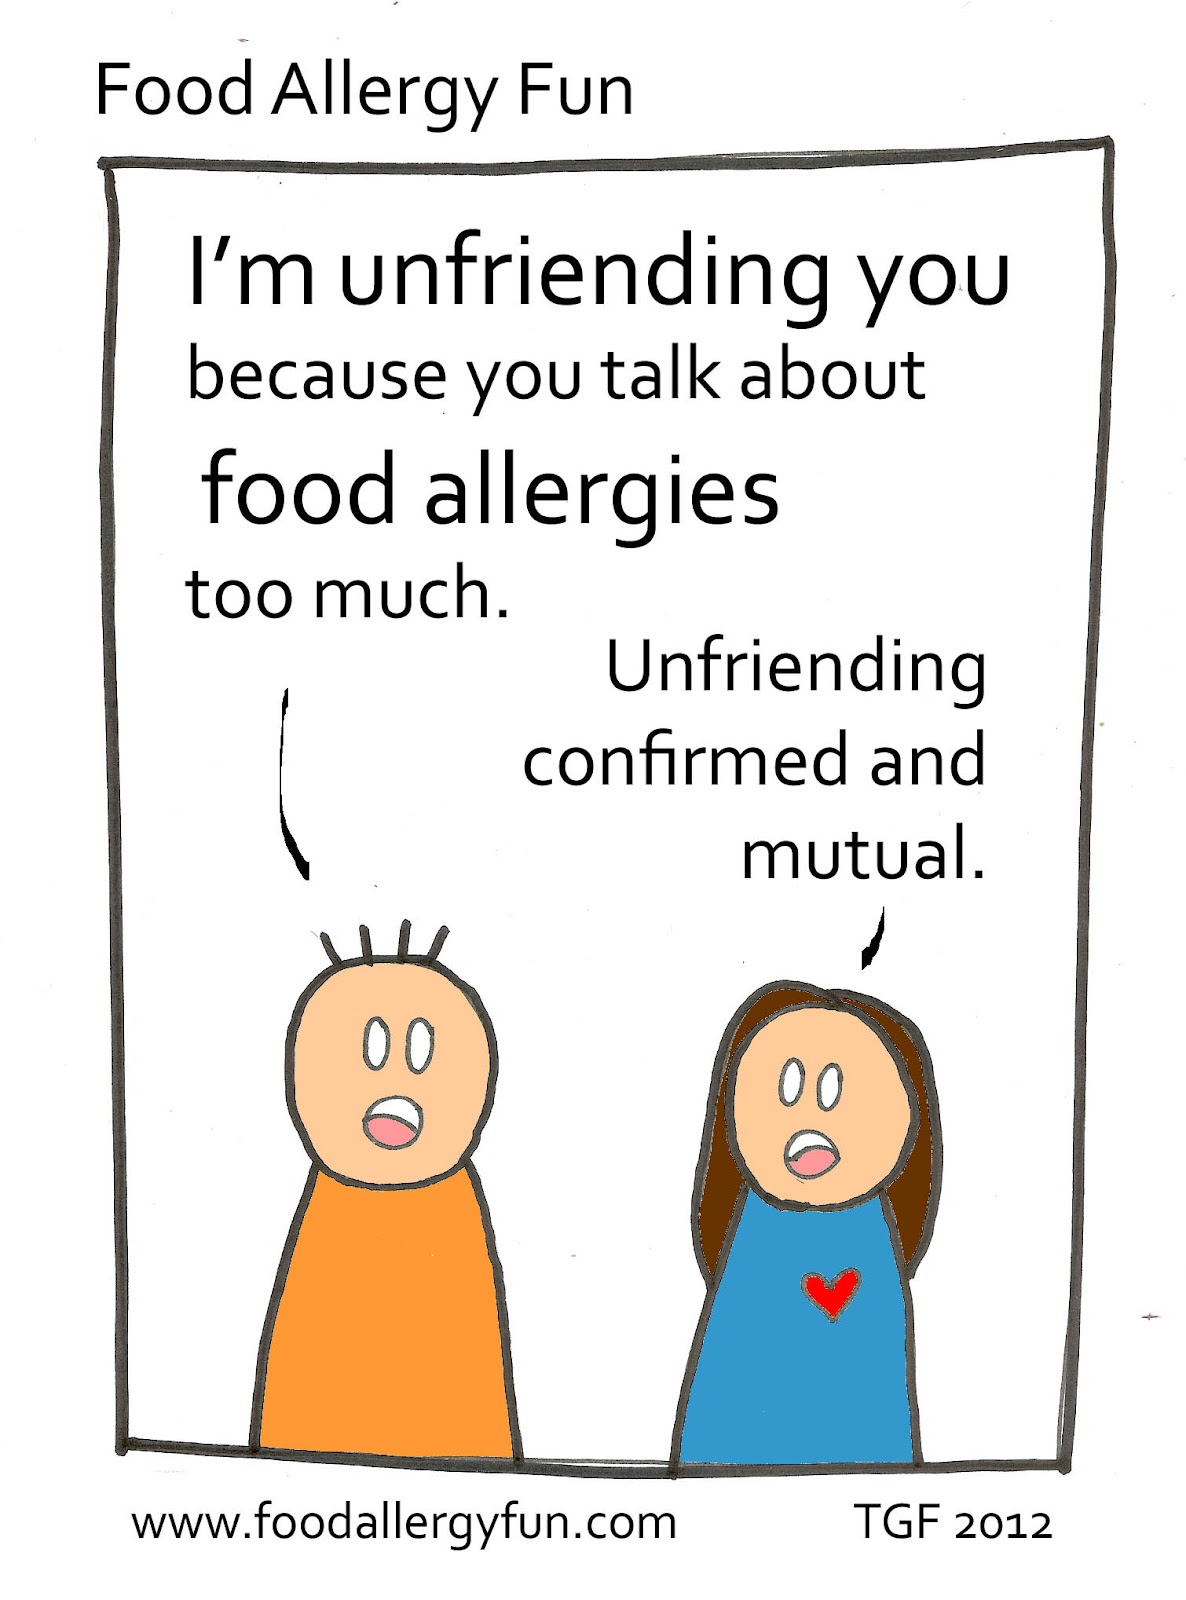 Food Allergy Fun: Unfriending - Food Allergy Cartoon